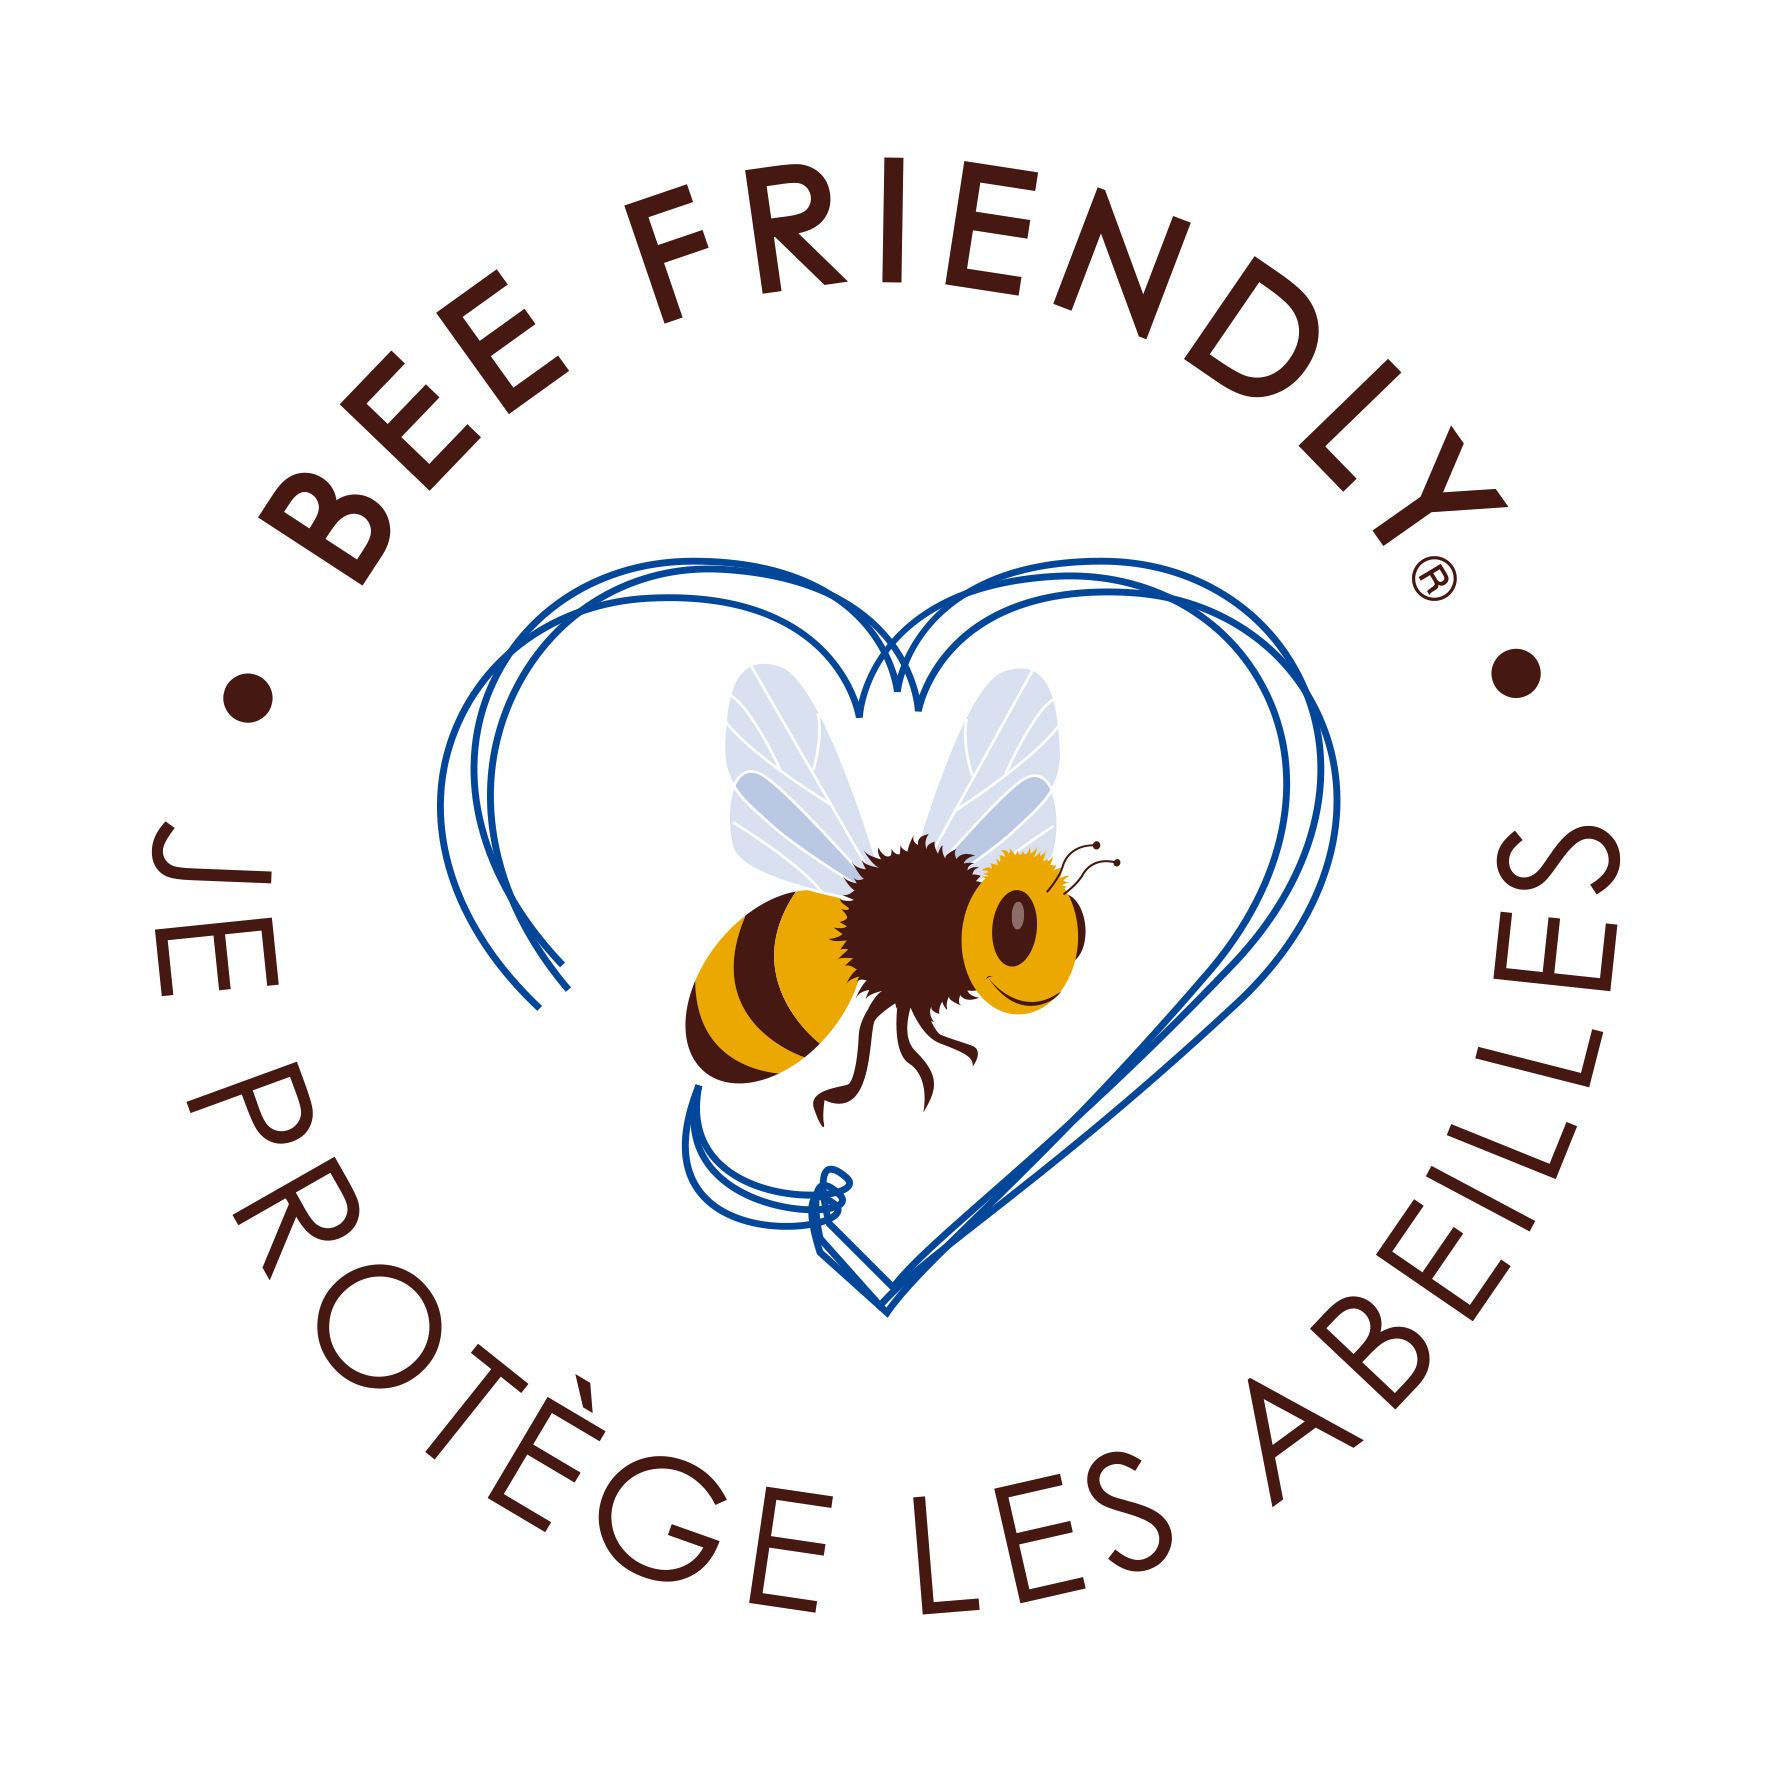 Image logo label bee friendly